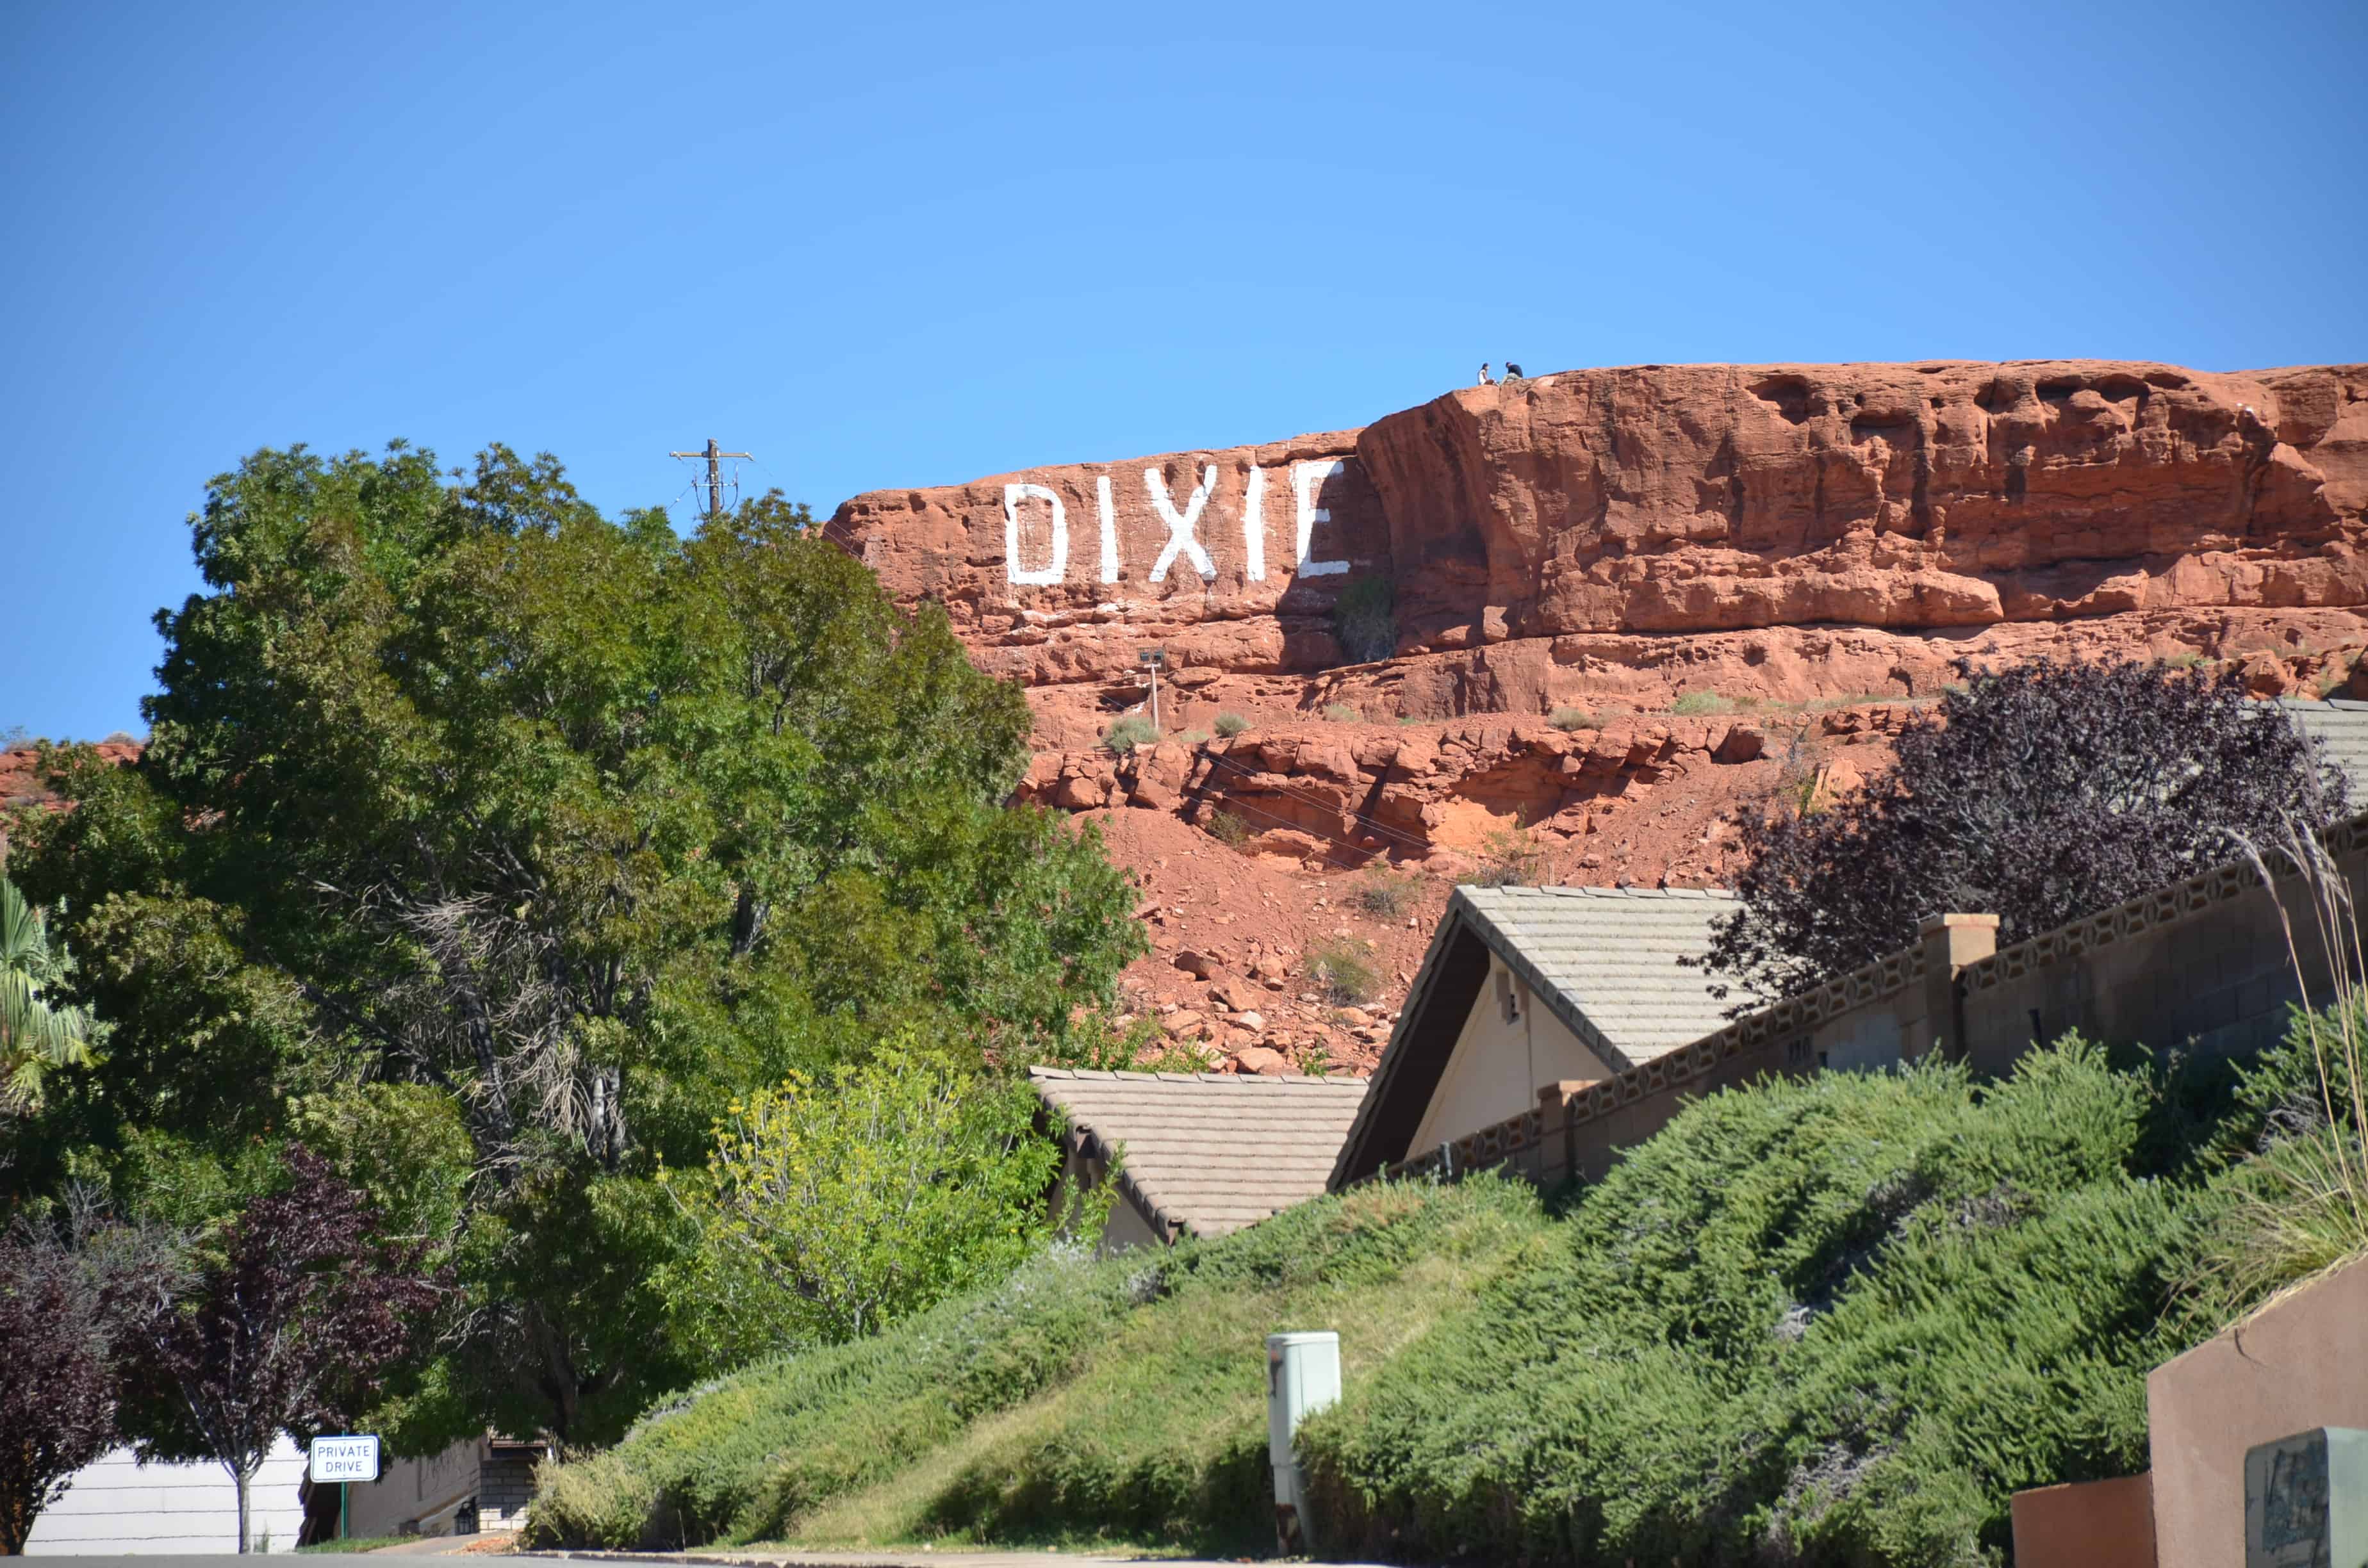 Dixie written on the rocks in St. George, Utah